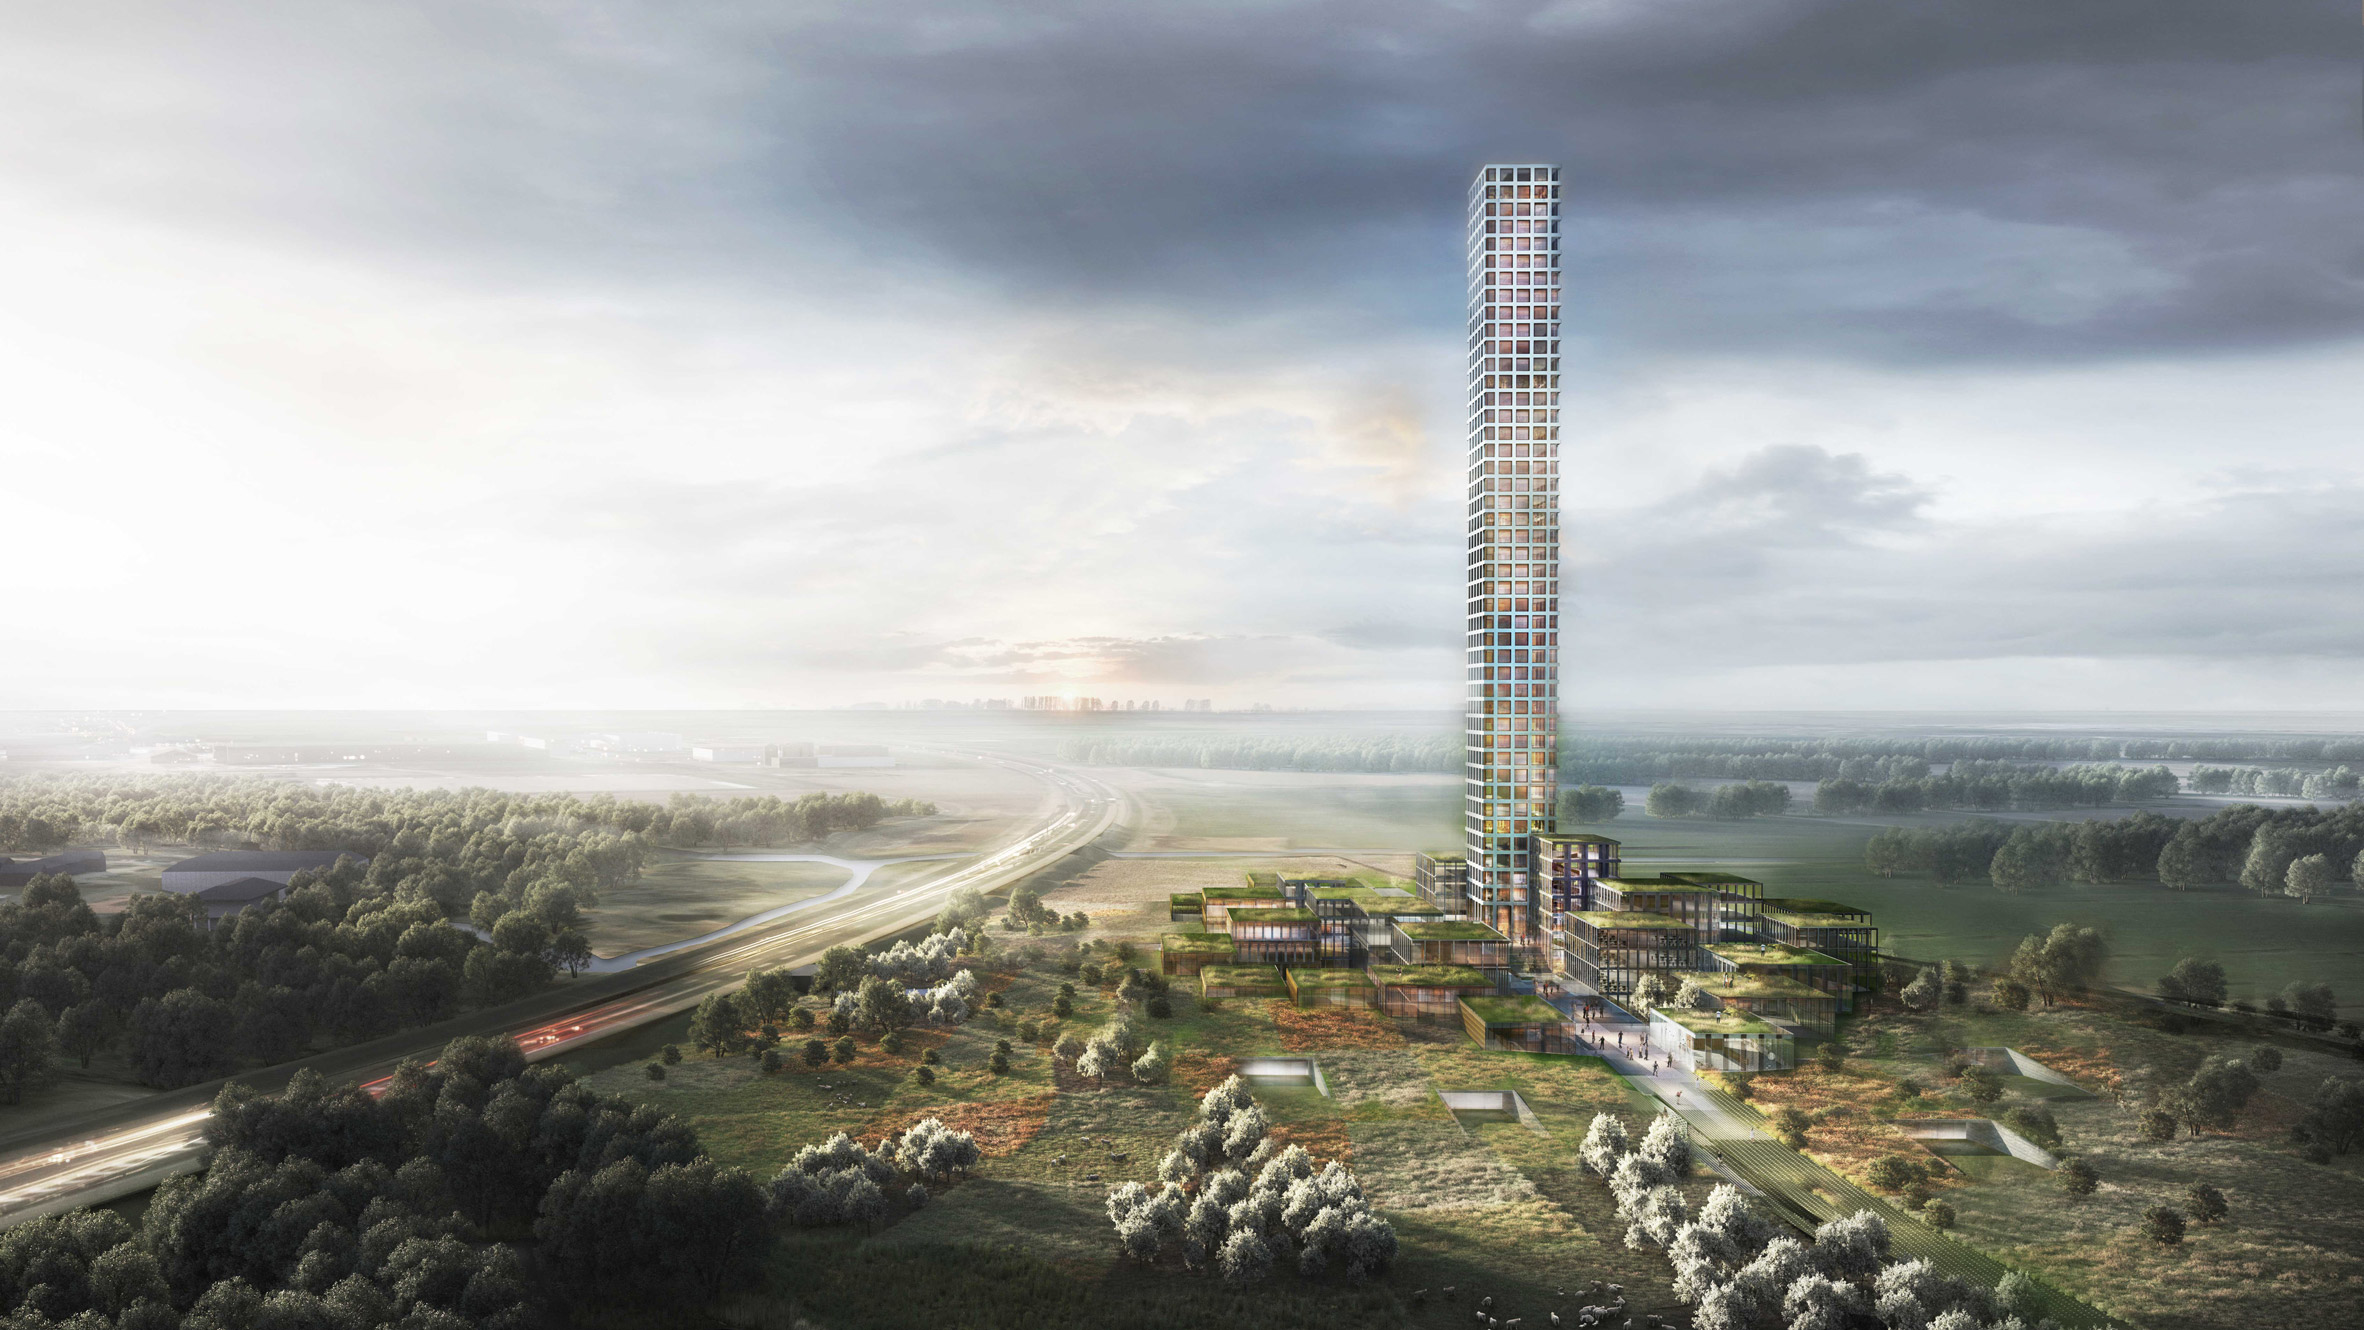 Dorte Mandrup designs Bestseller Tower, the tallest building in Western Europe